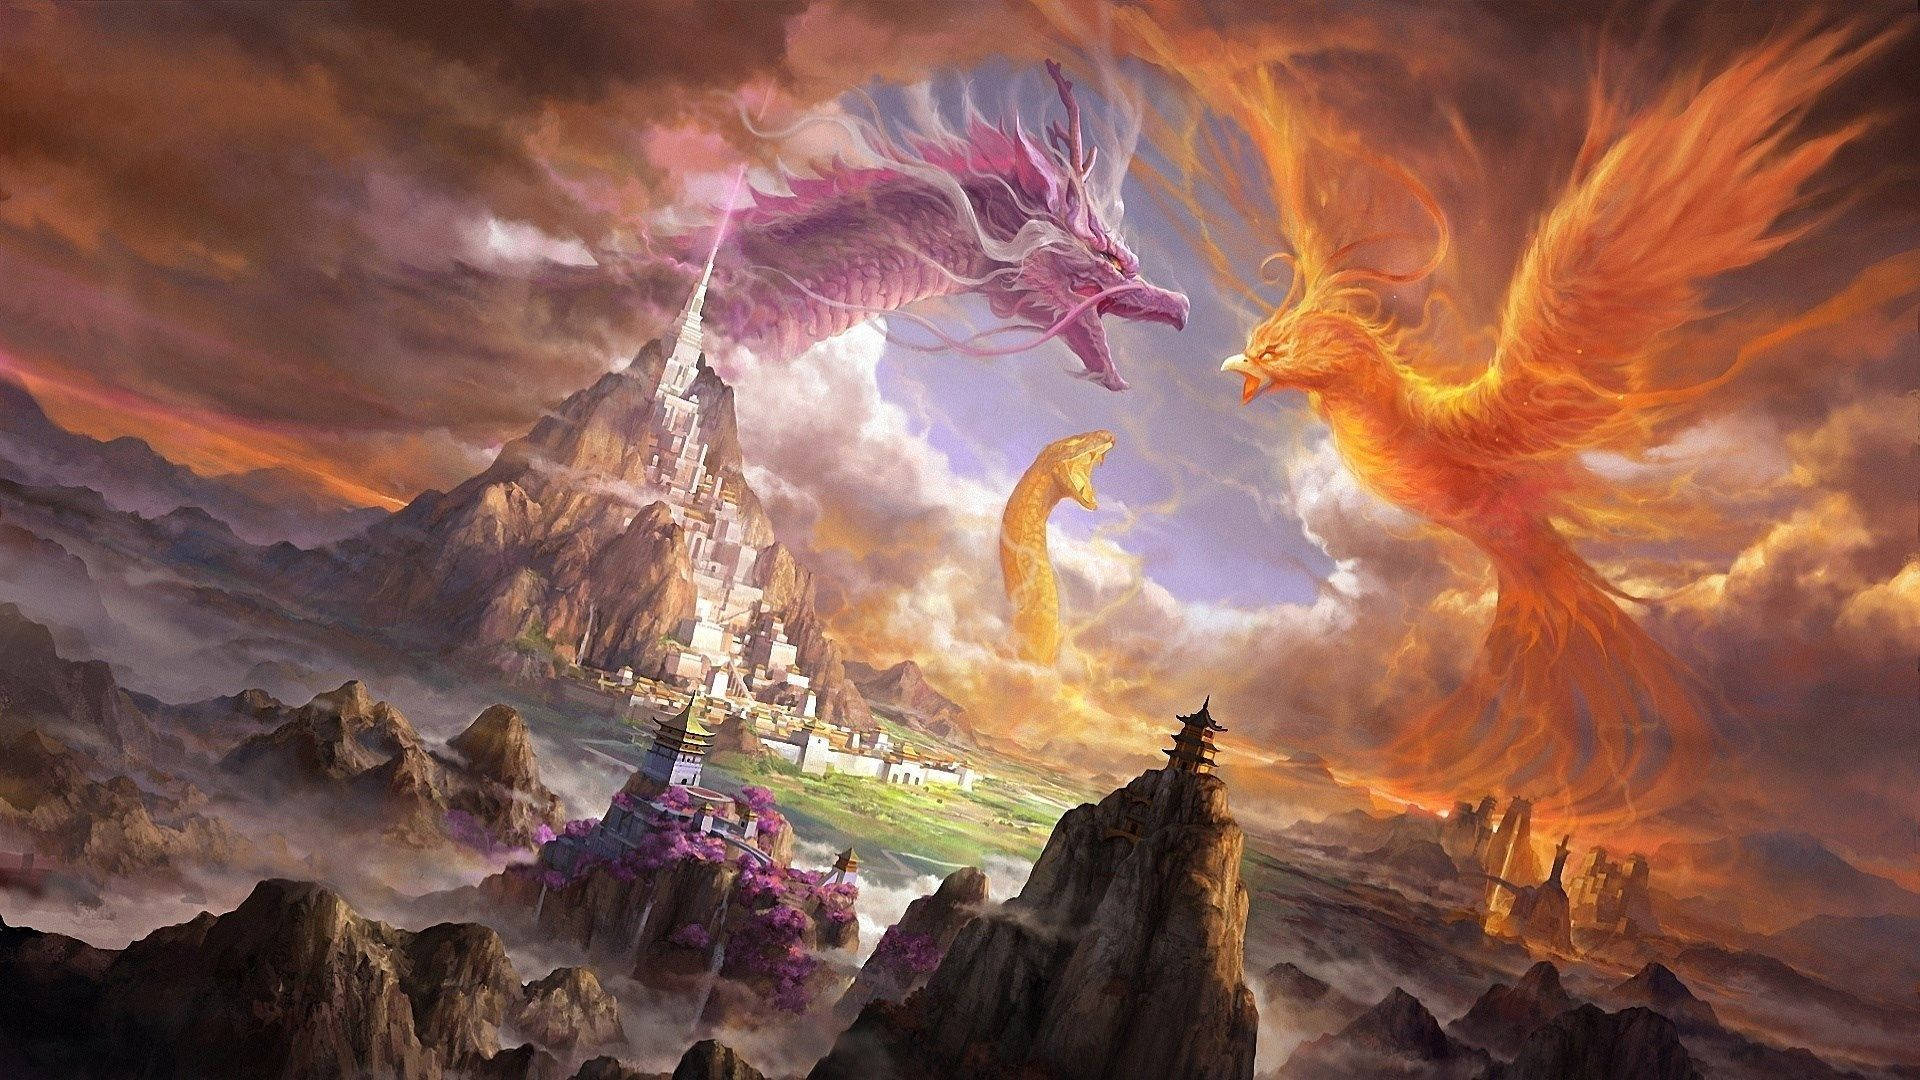 The Legendary Phoenix and Dragon Wallpaper